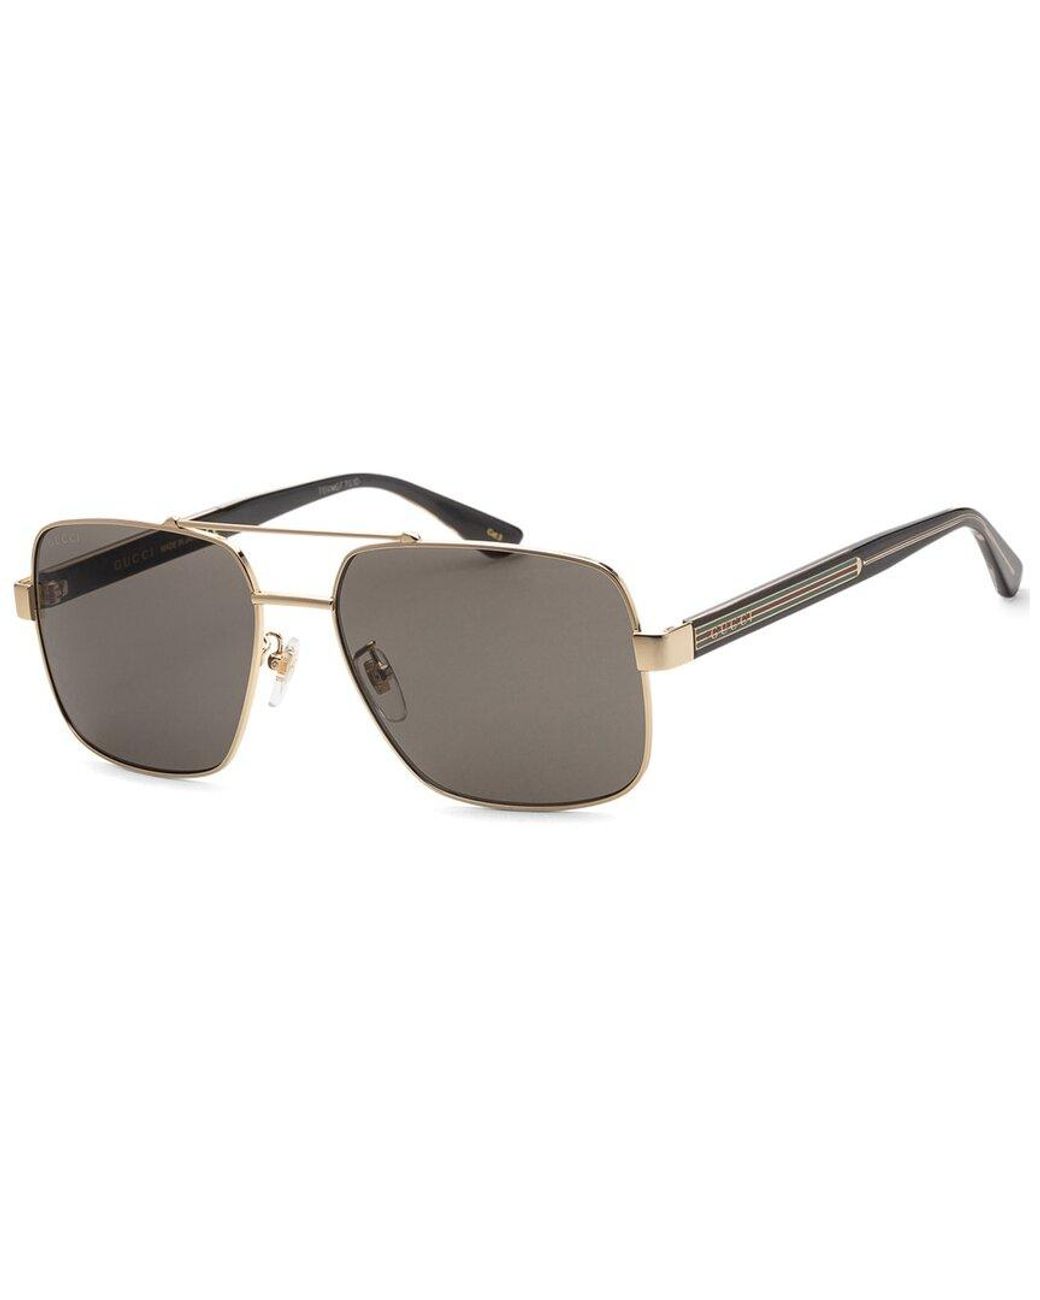 Gucci GG0529S 60mm Sunglasses in Gold (Metallic) | Lyst